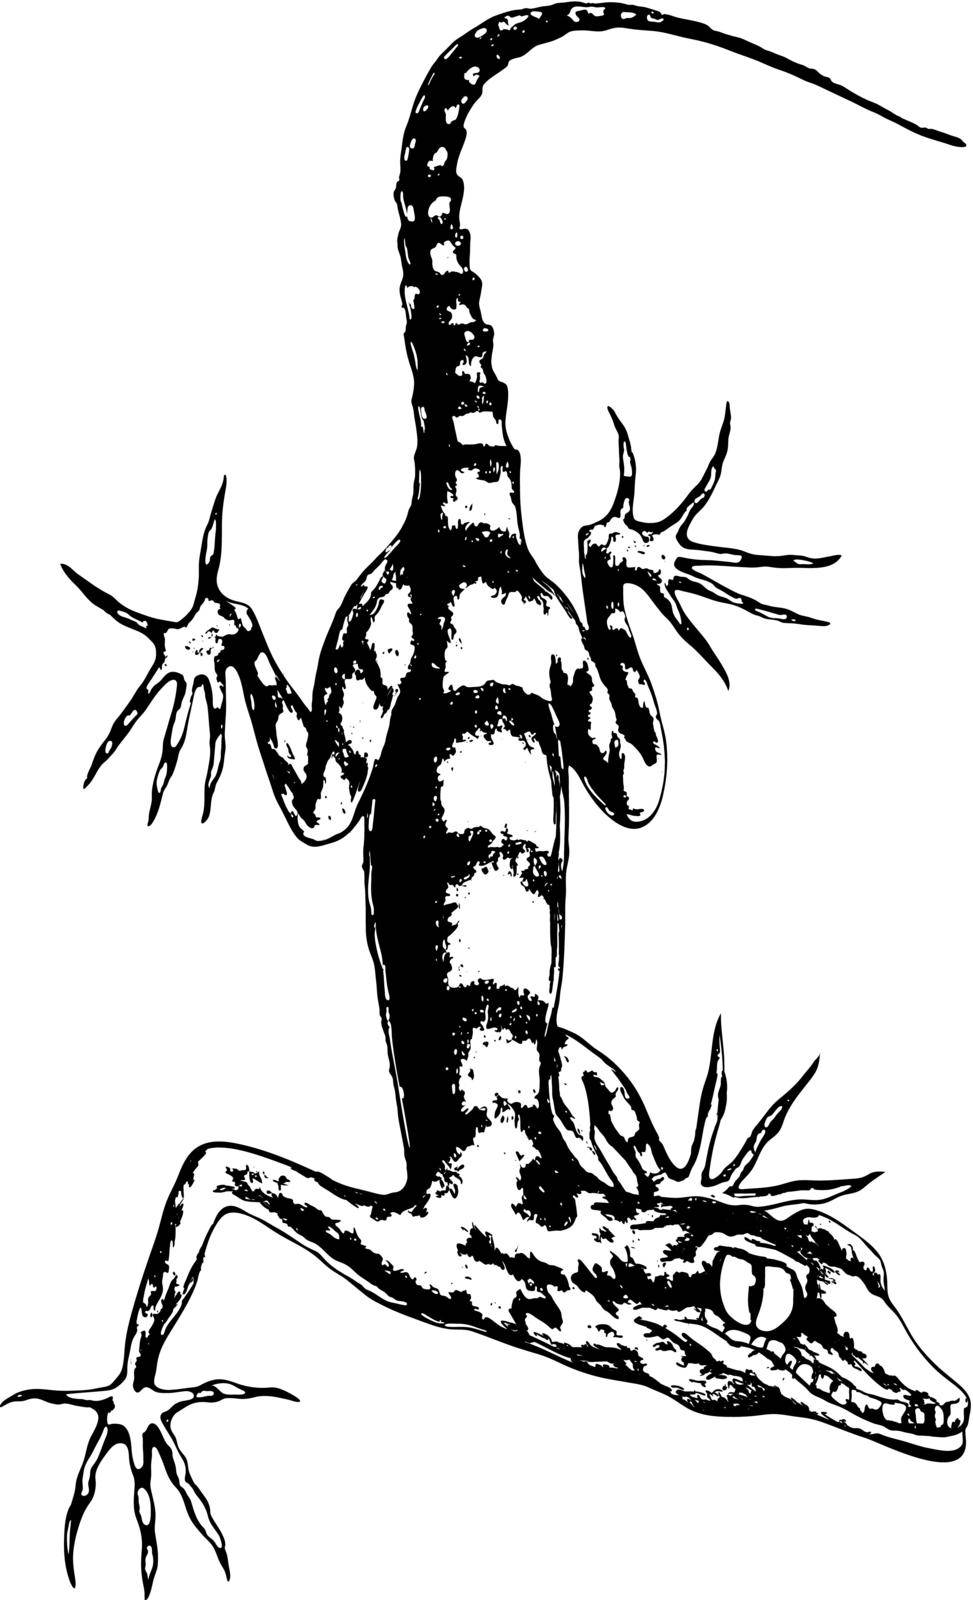 Lizard hand-drawn vector by roman79